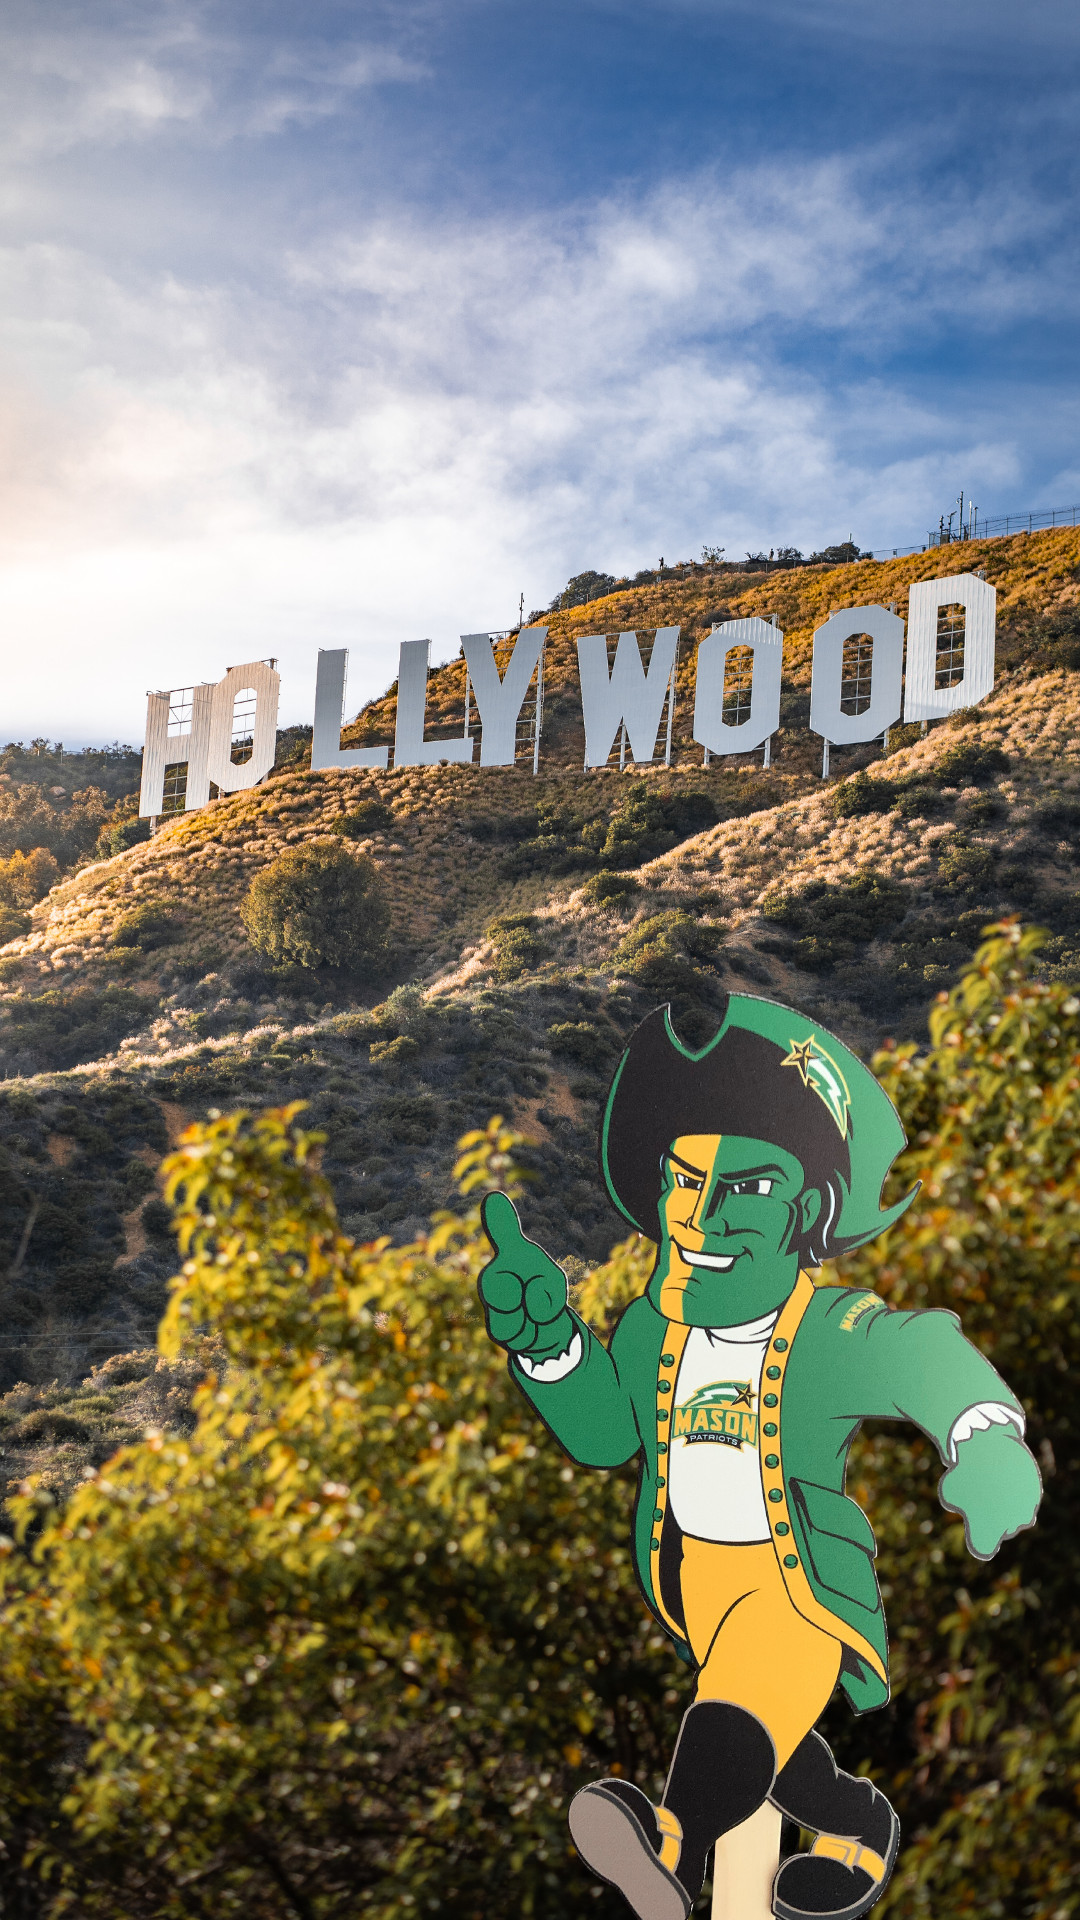 Flat Patriot visiting the Hollywood sign